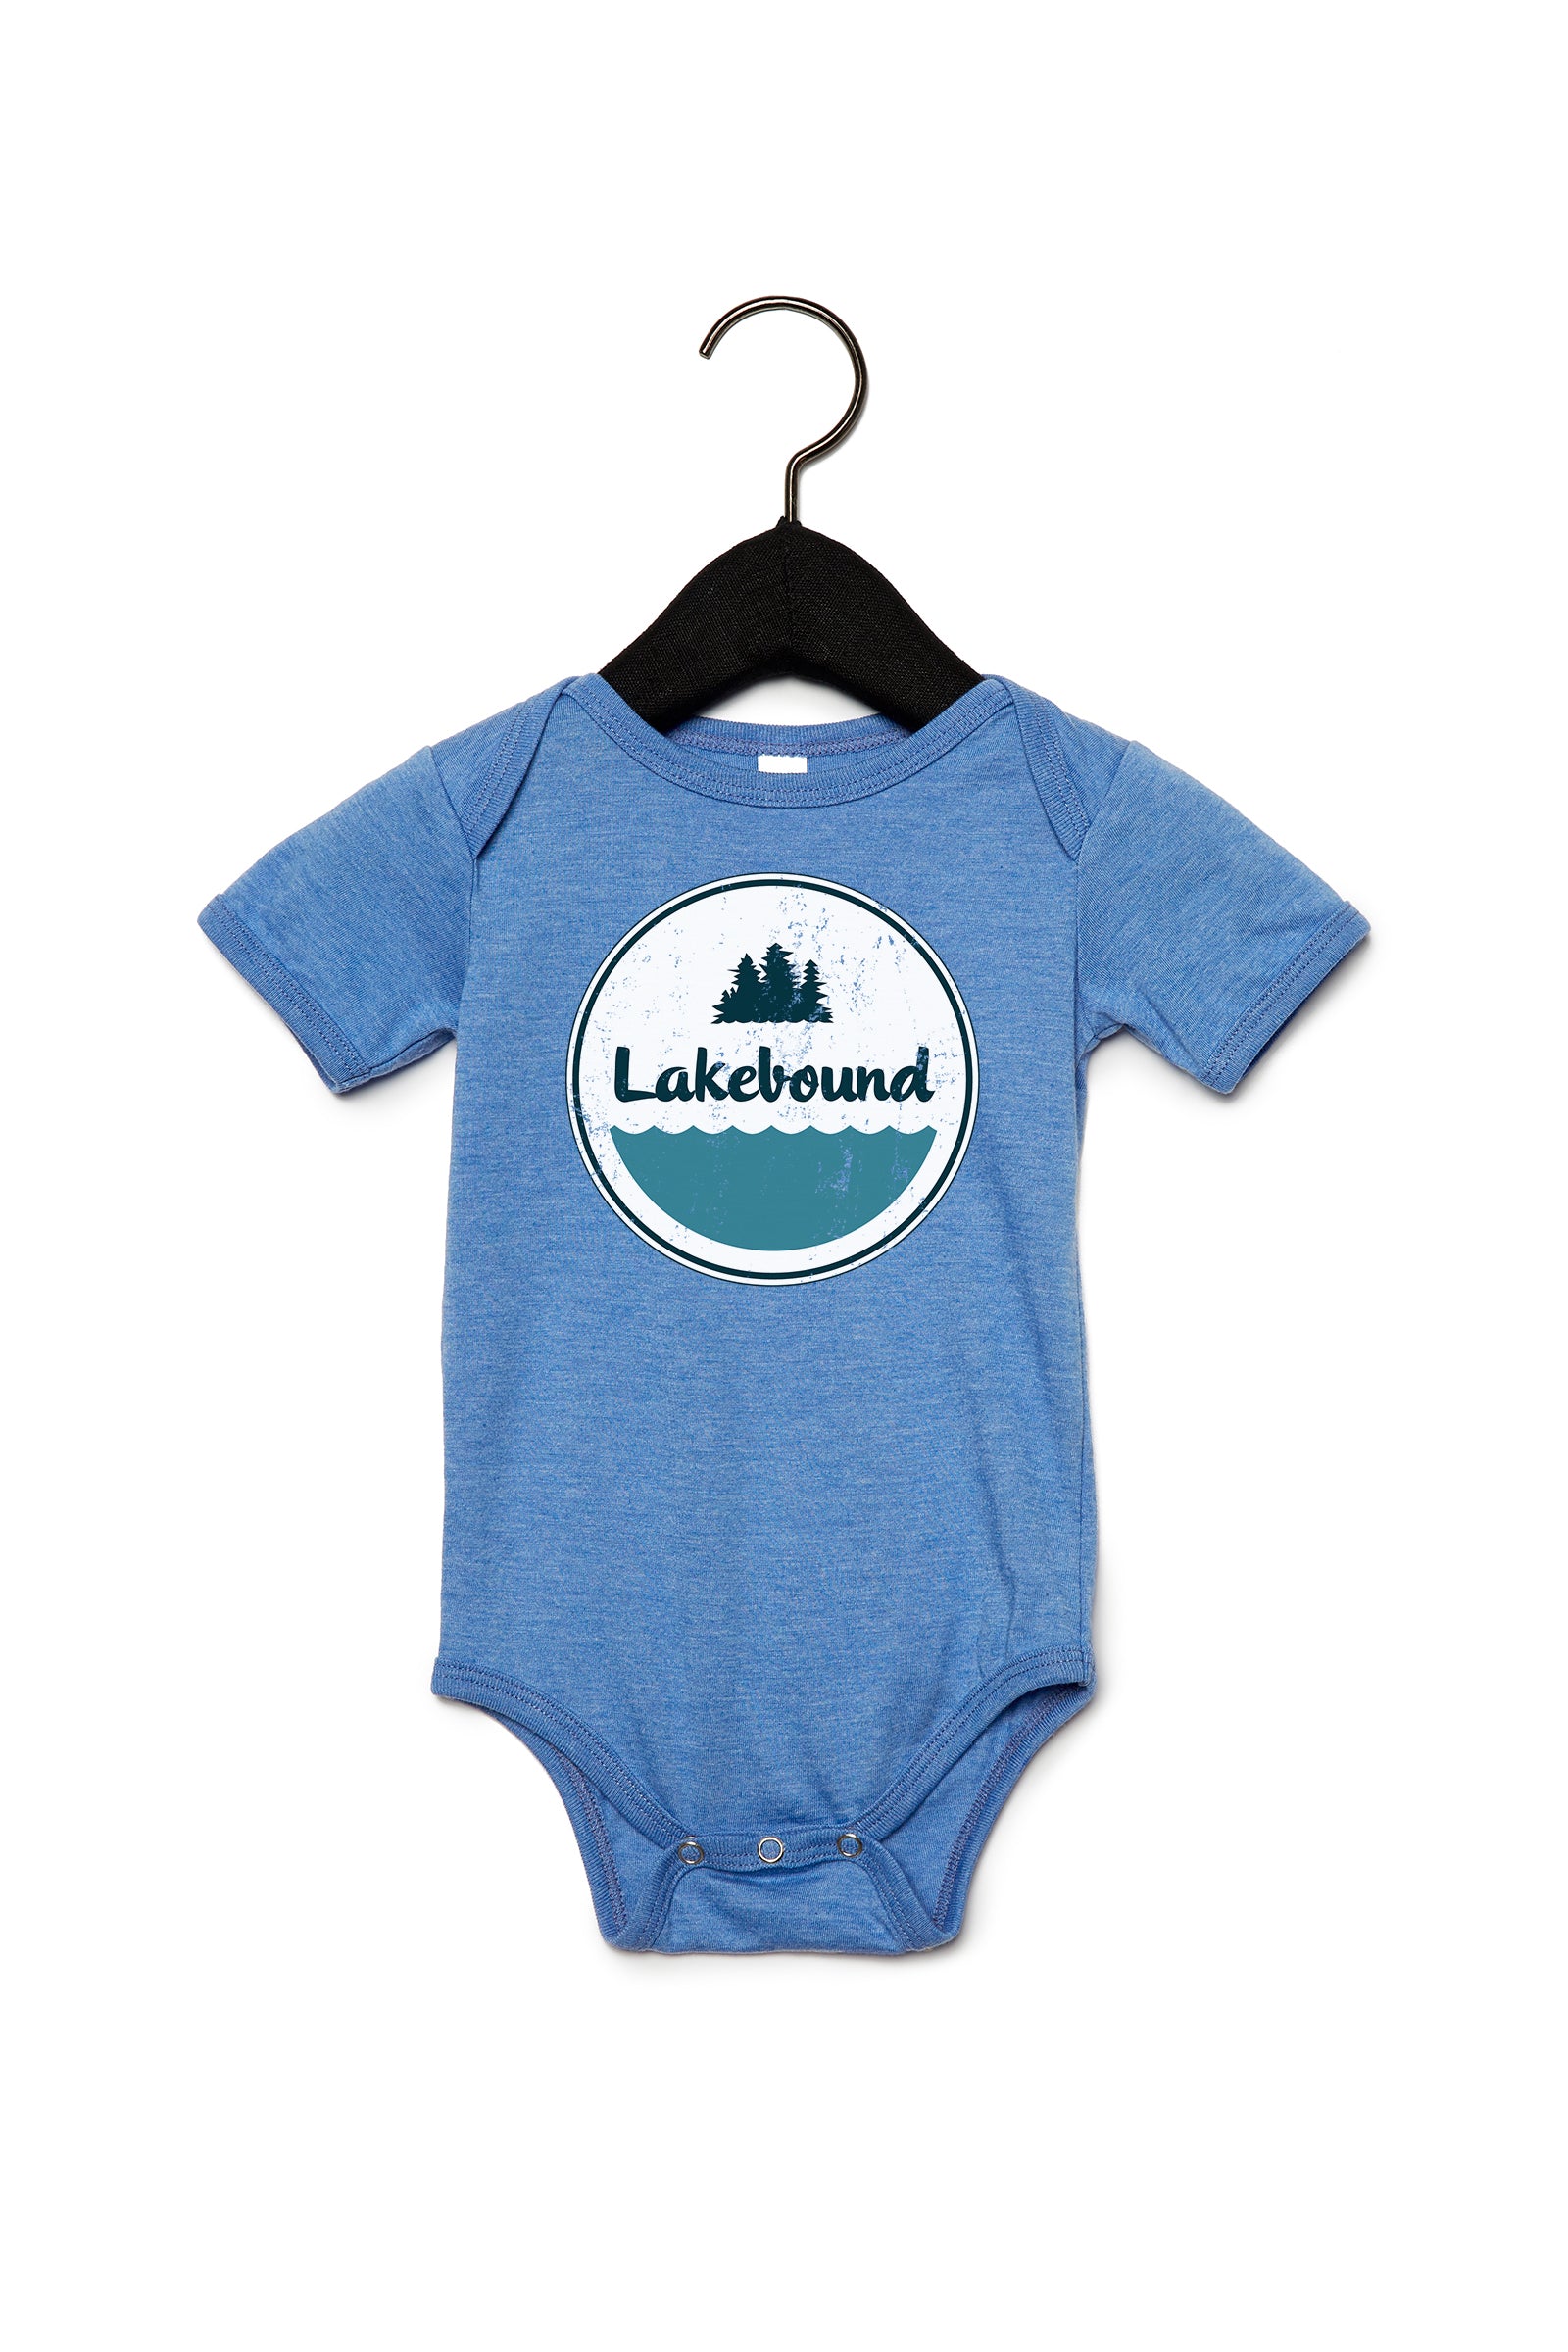 Lakebound Baby Bodysuit